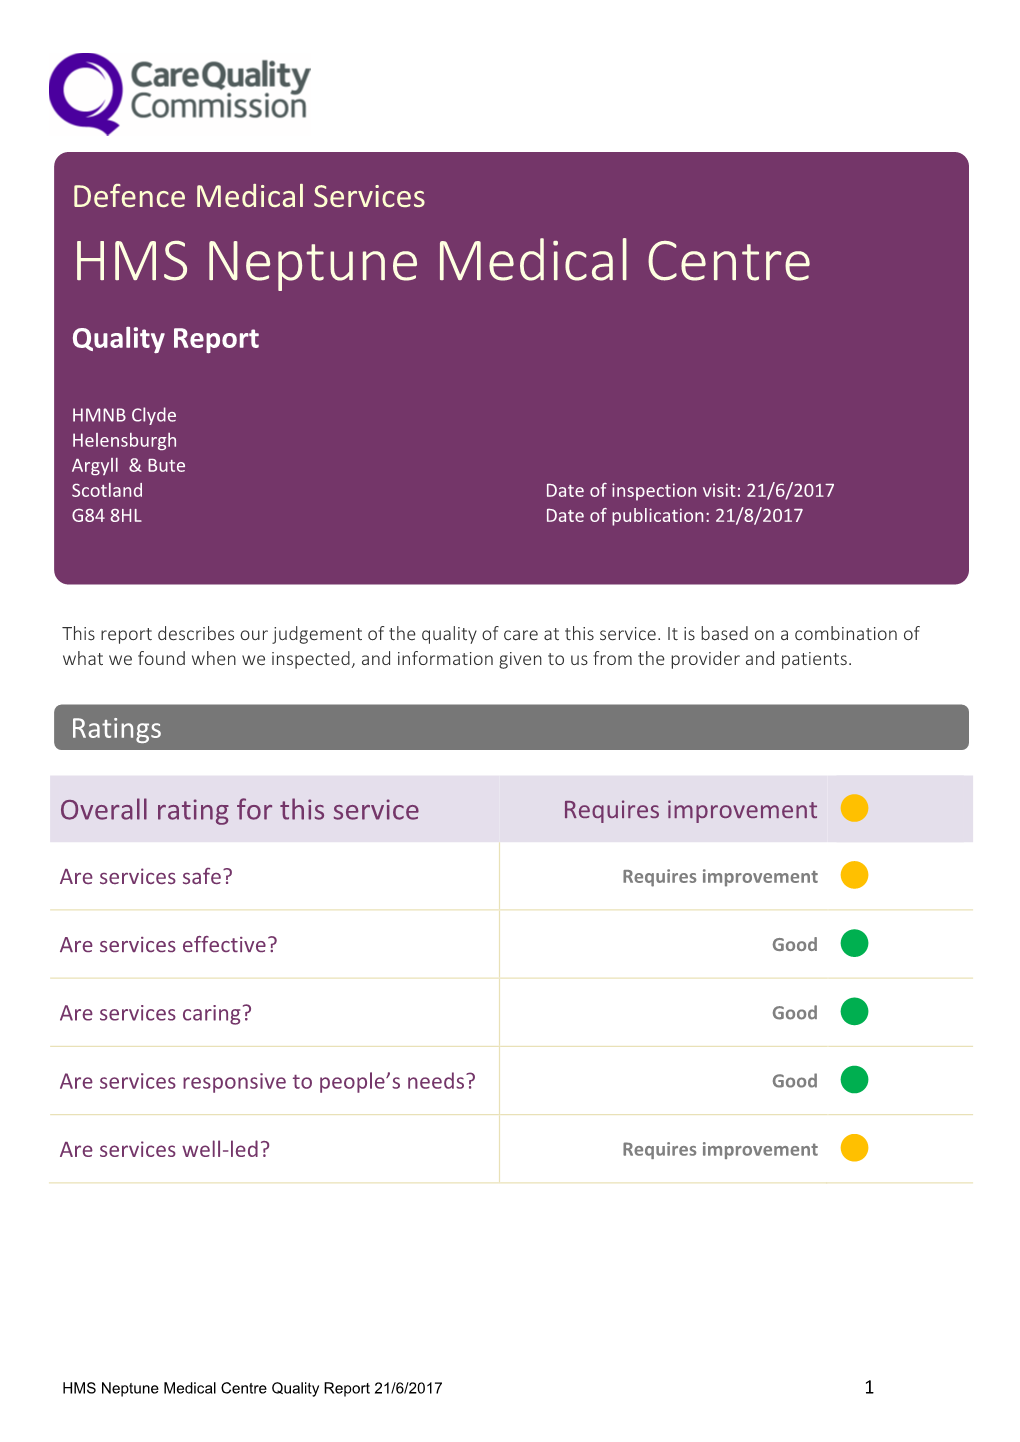 HMS Neptune Medical Centre